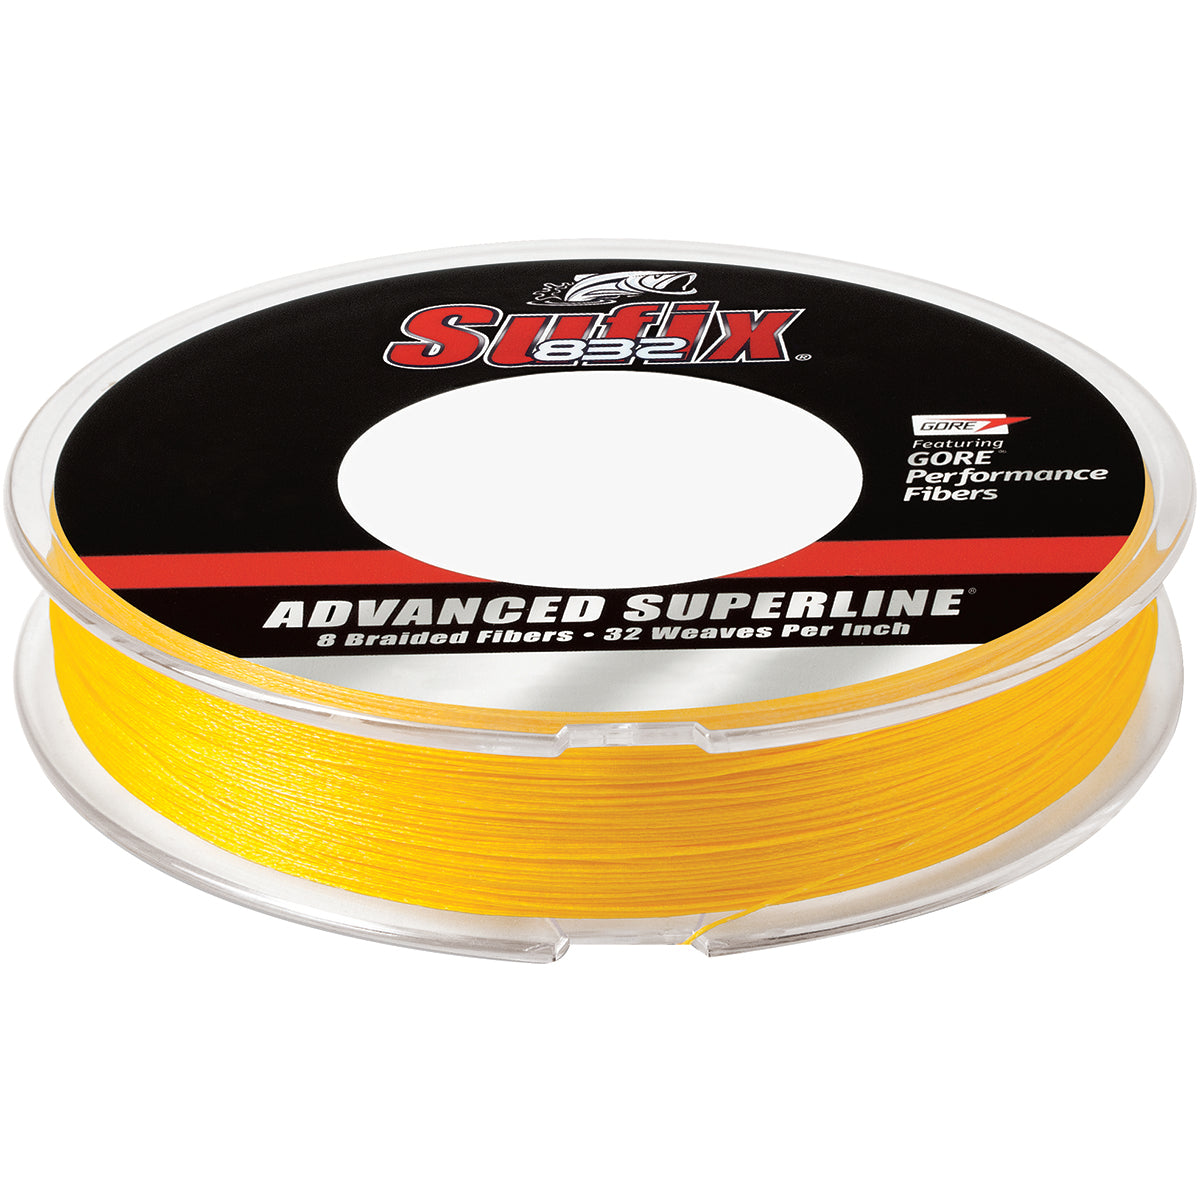 Sufix 150 Yard 832 Advanced Superline Braid Fishing Line - Hi-Vis Yellow Sufix